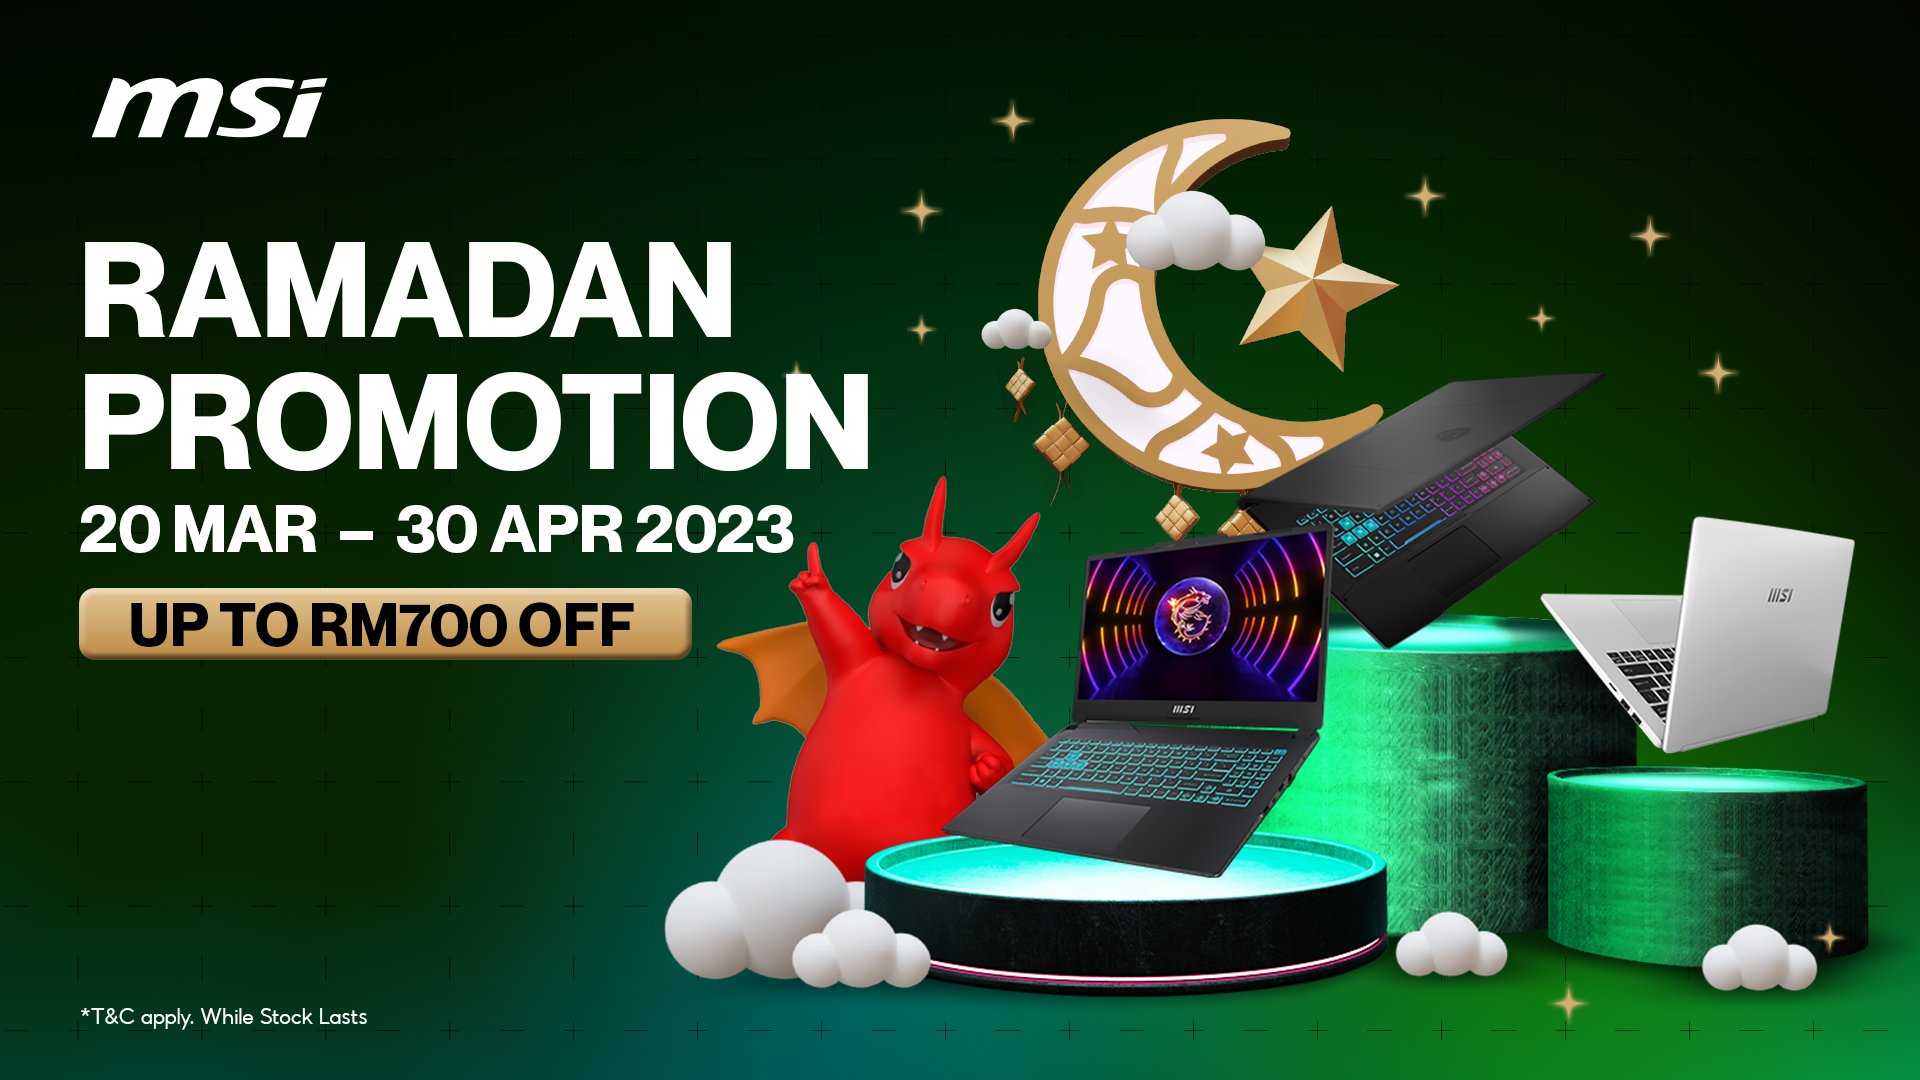 MSI Malaysia kicks off Ramadan promotion, up to RM700 off gaming laptops thumbnail